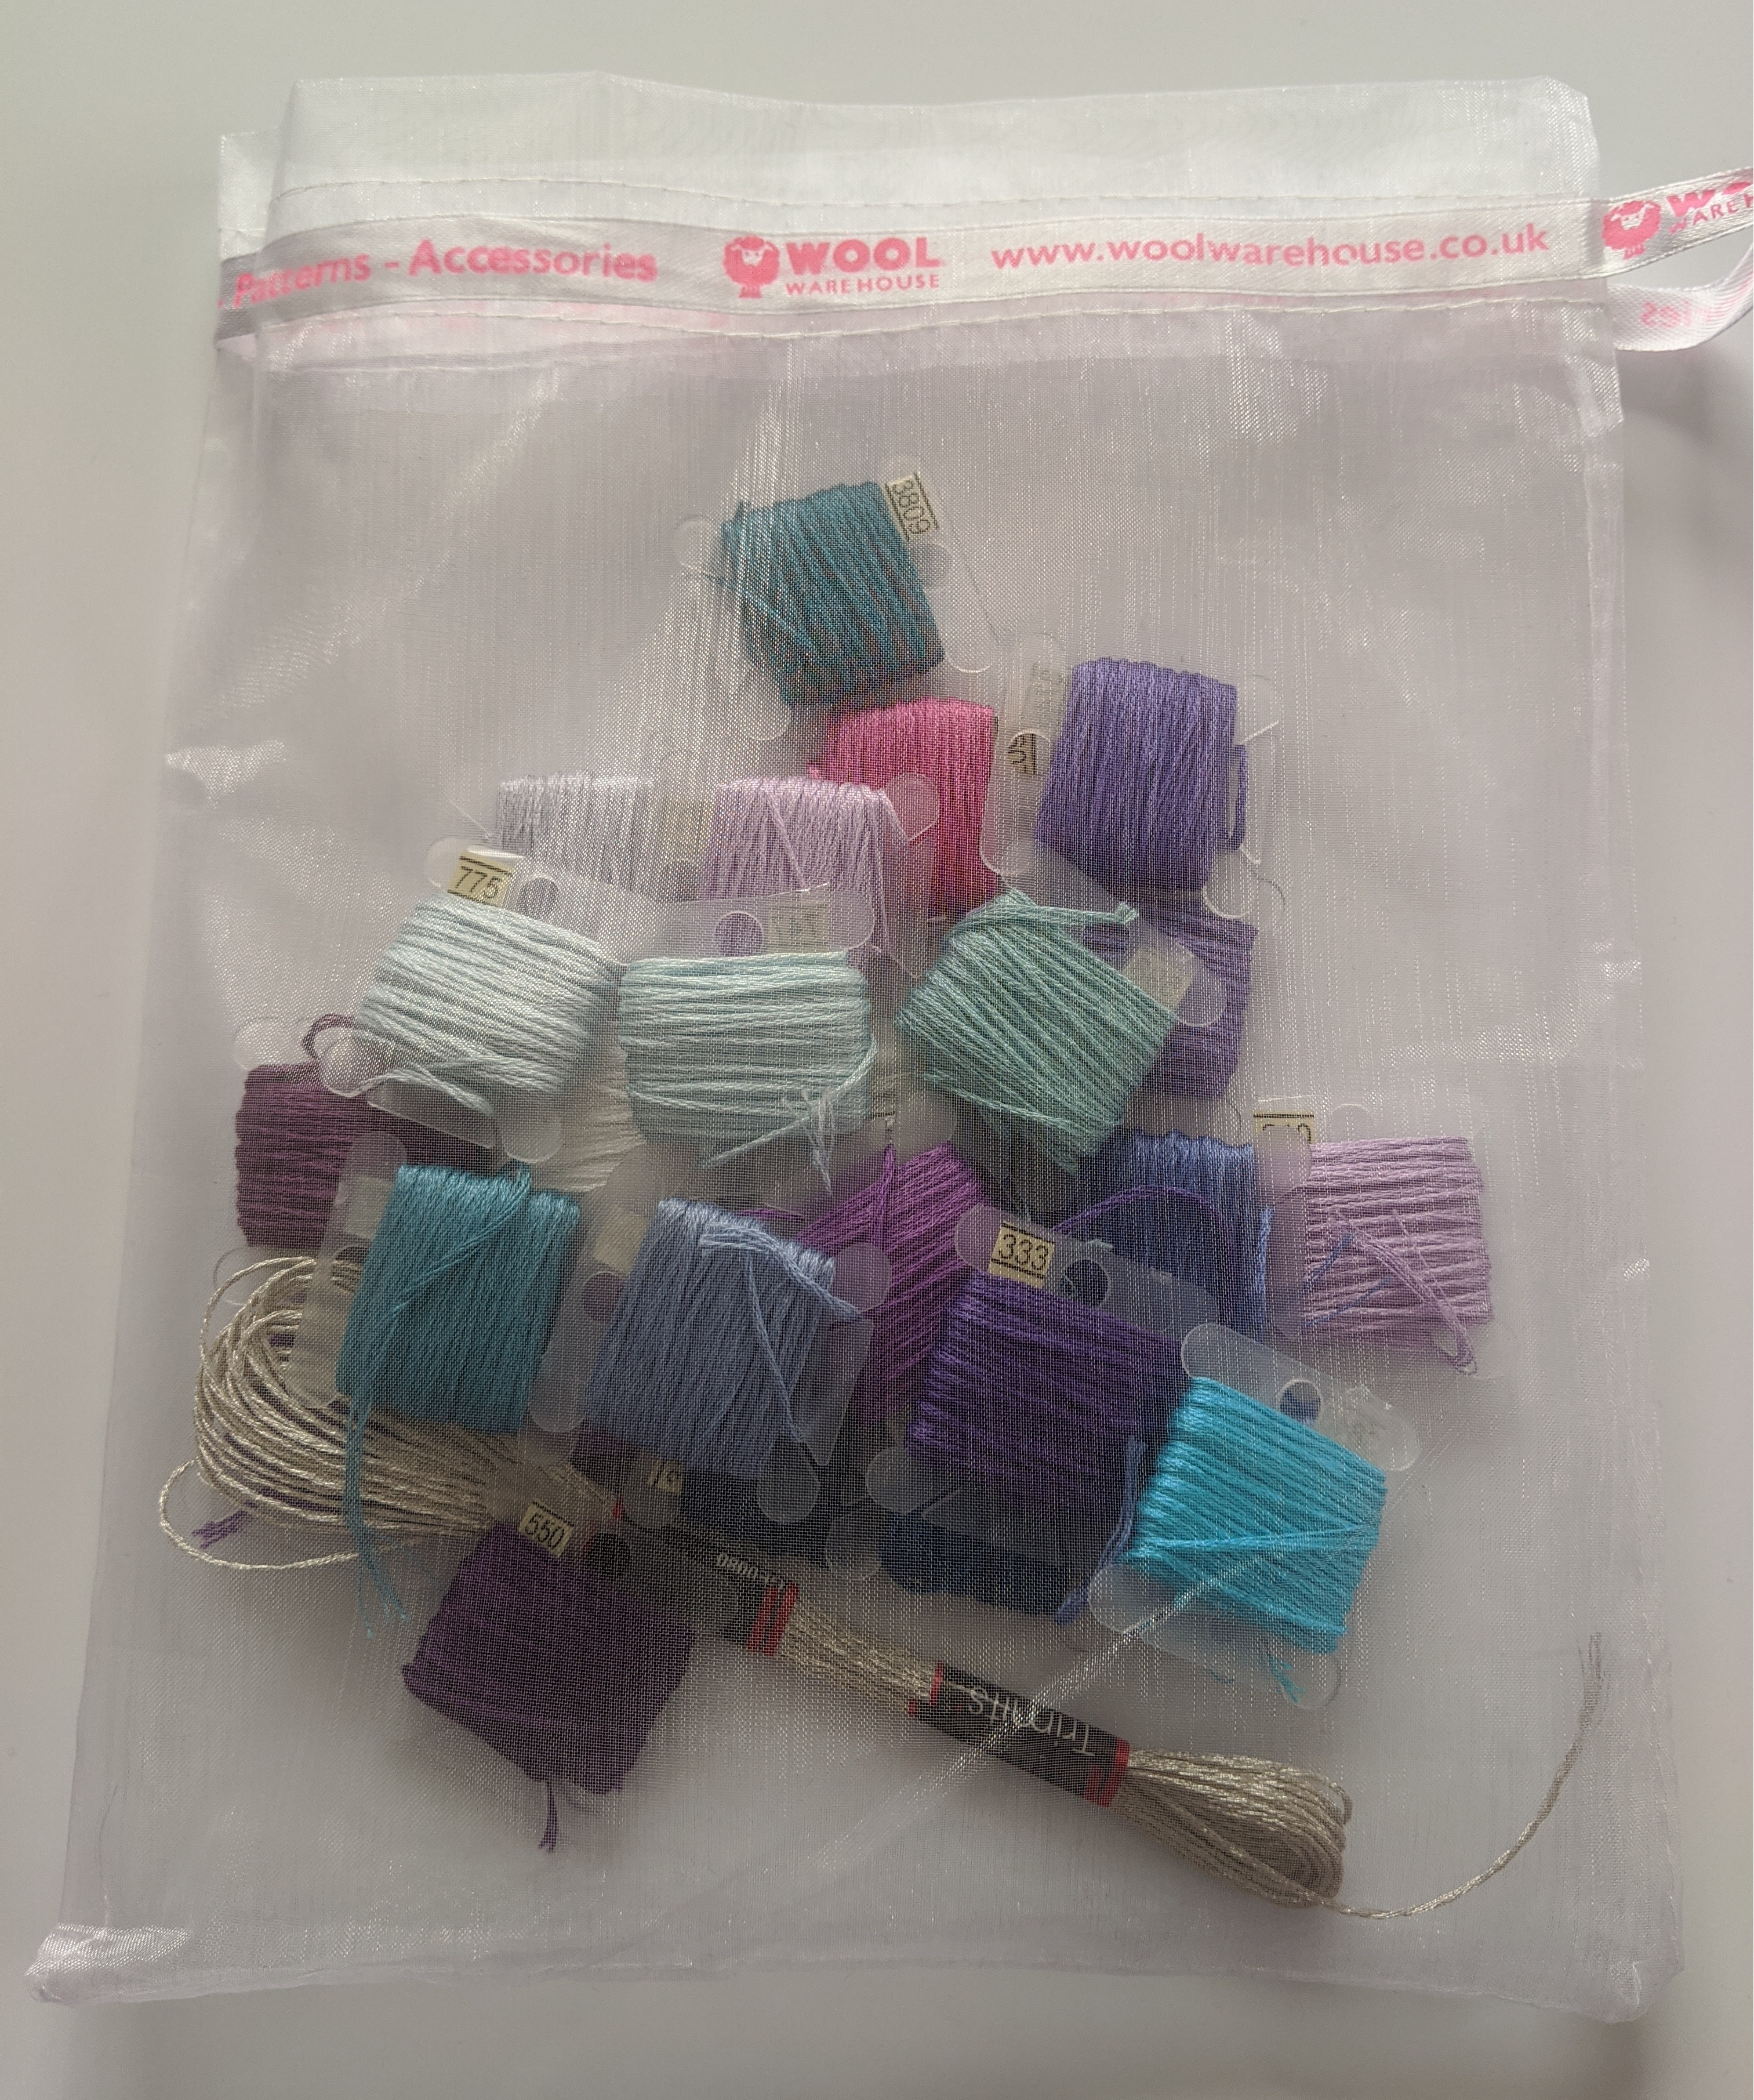 A bag of coloured thread on bobbins